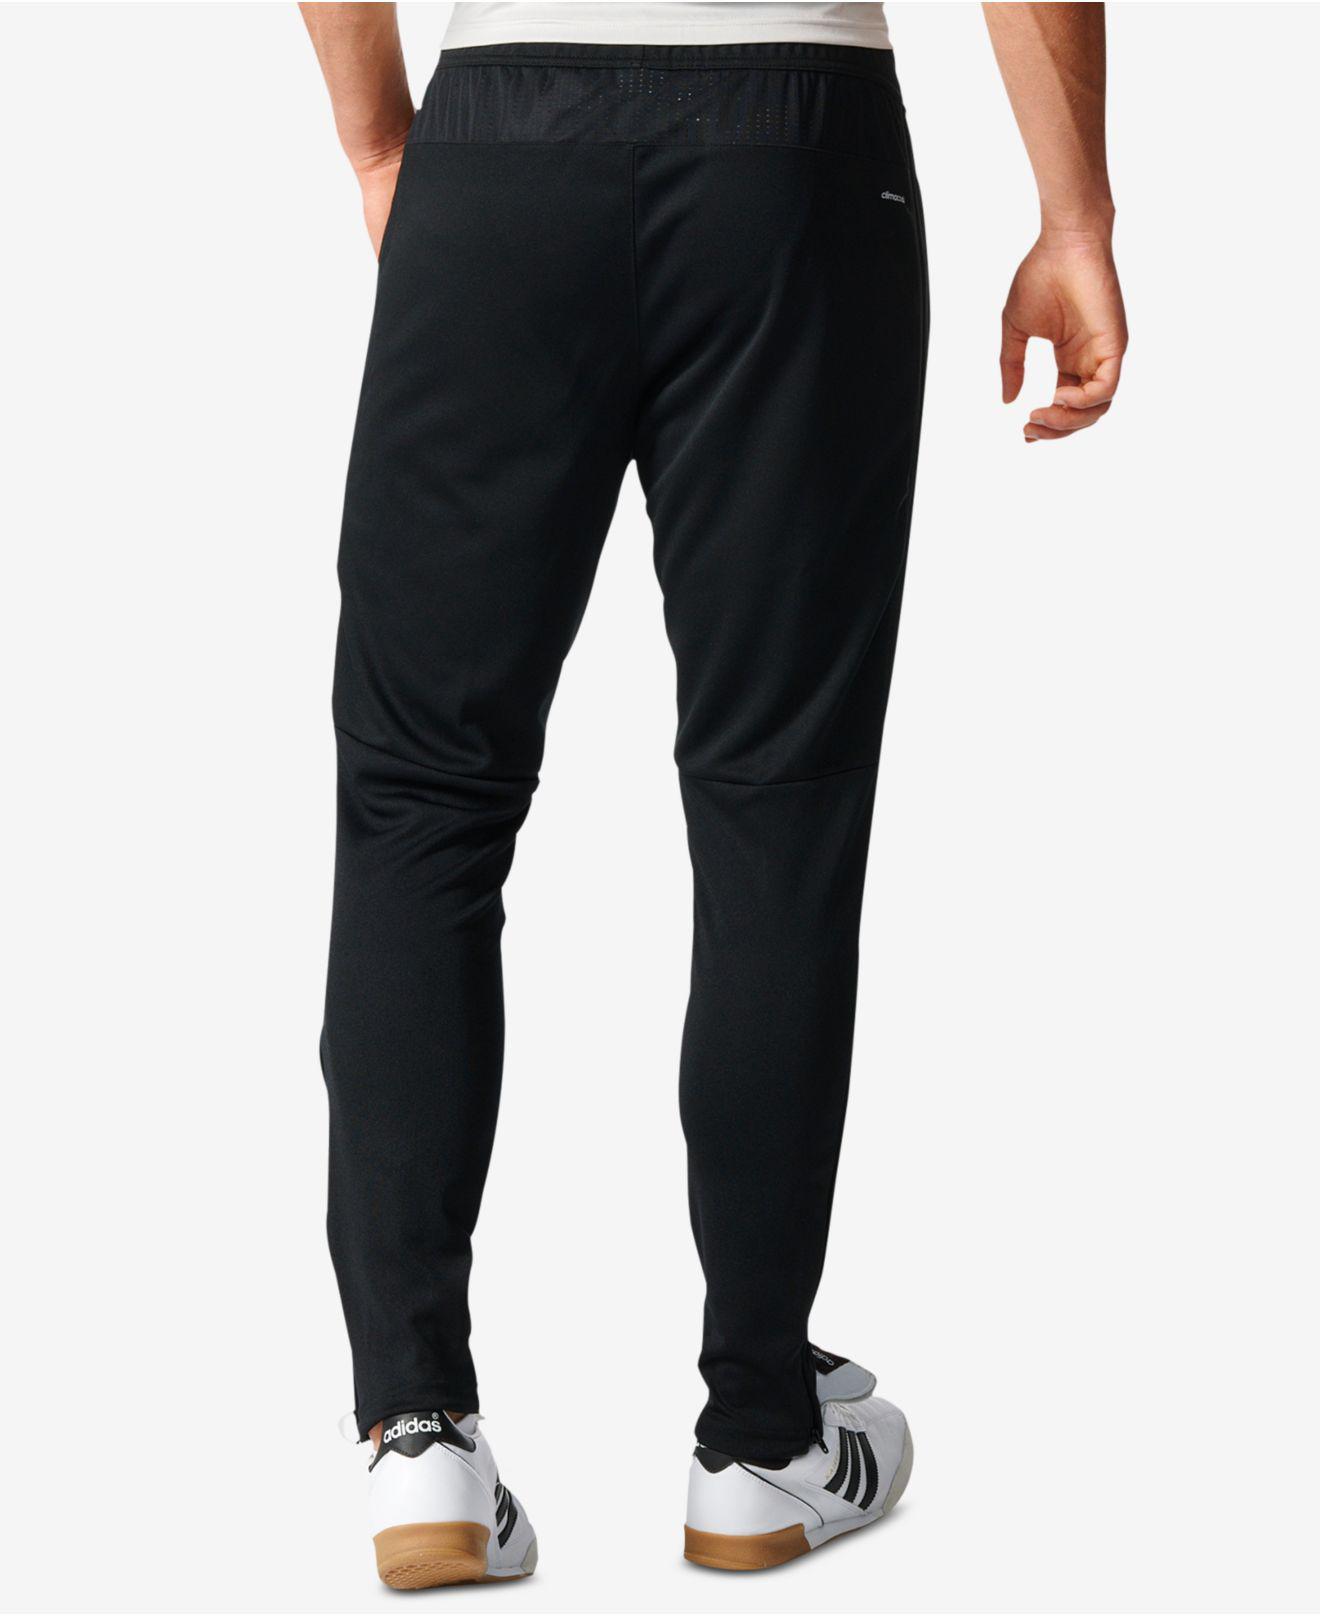 adidas Men ClimaCool Tiro 17 Soccer Pants | Mens outfits, Adidas outfit,  Adidas men